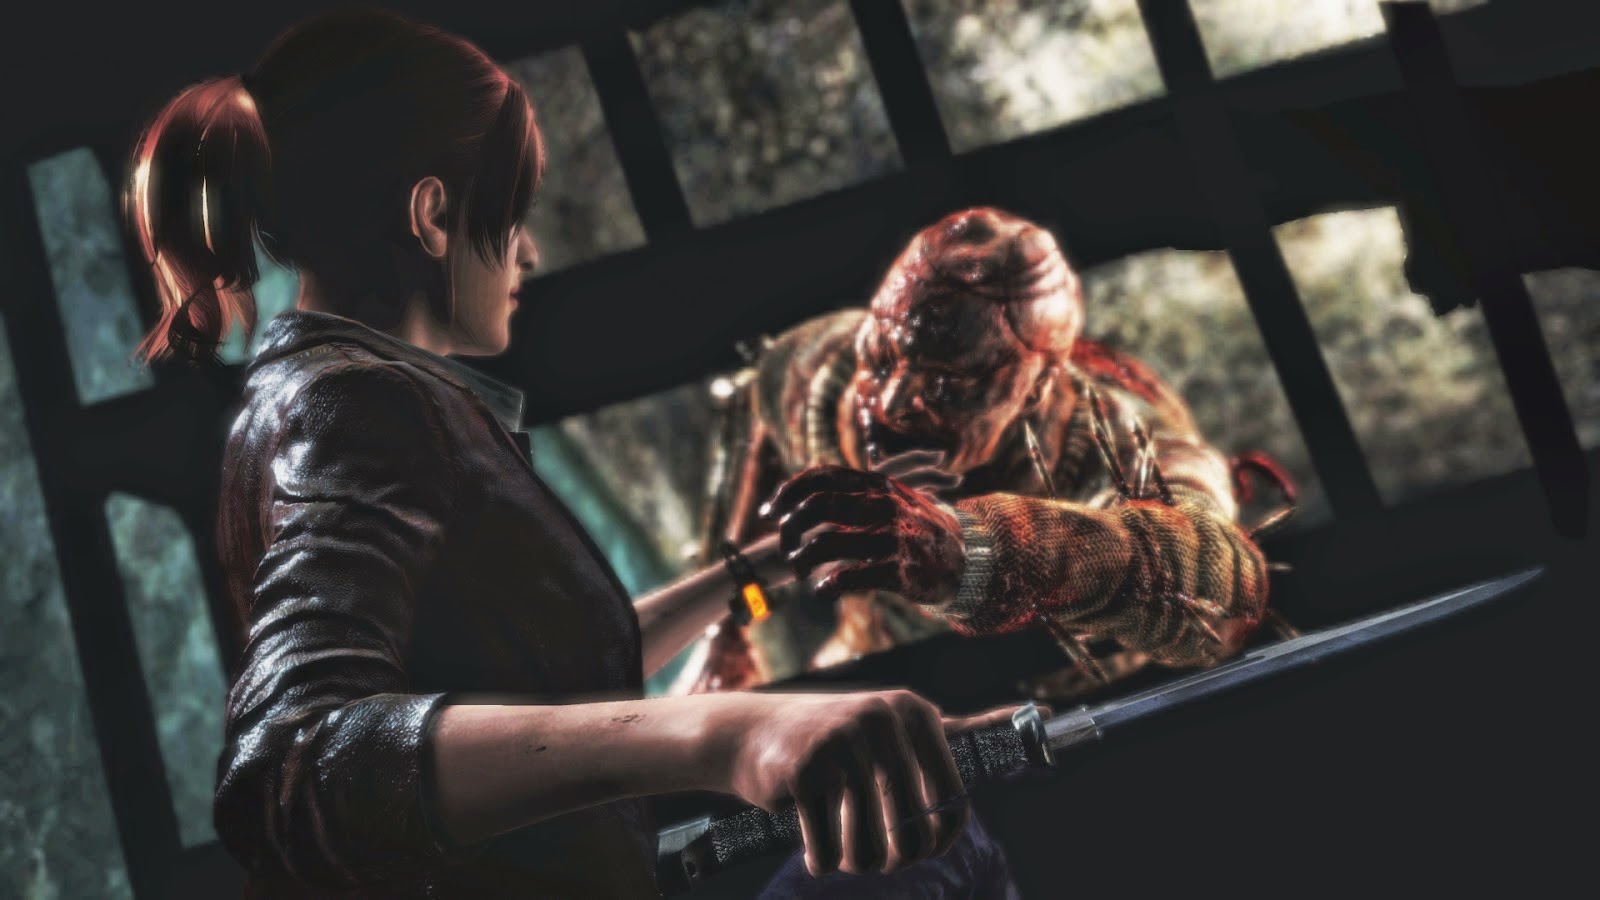 Resident Evil Revelations 2: Espidode 1 Multilenguaje (Esp)